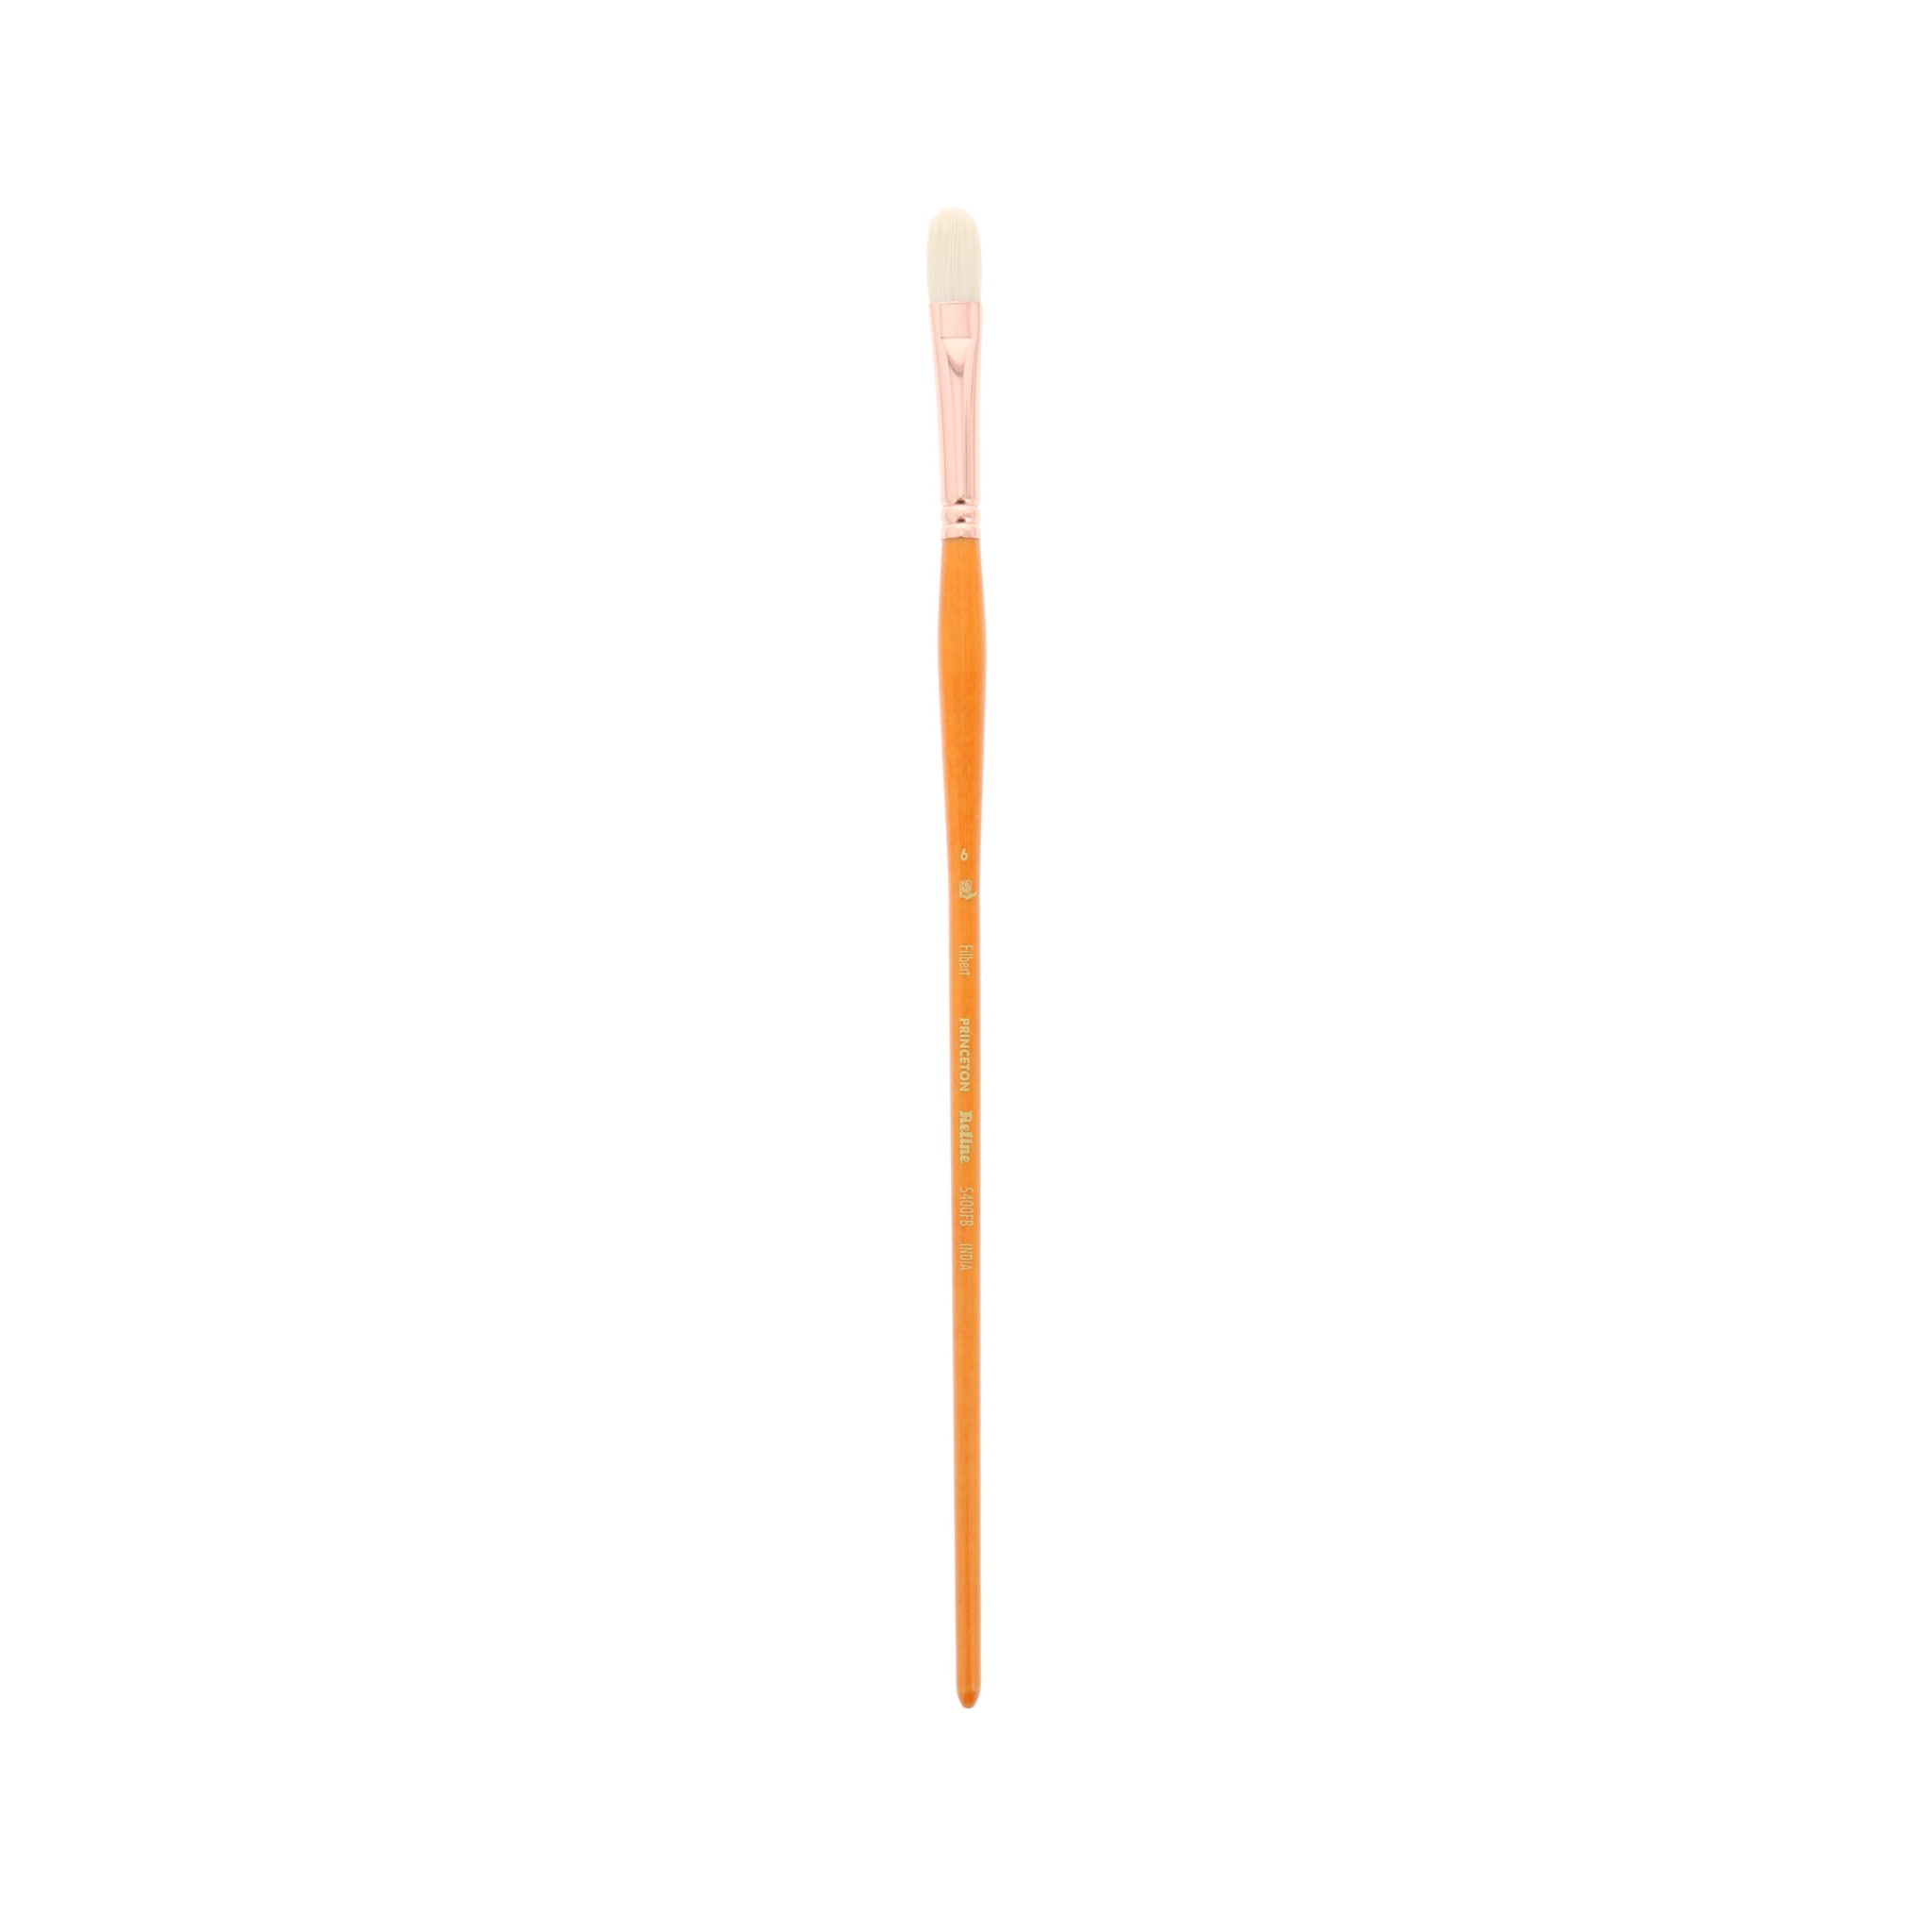 Princeton Refine Series 5400 Natural Bristle Paint Brush Size 20